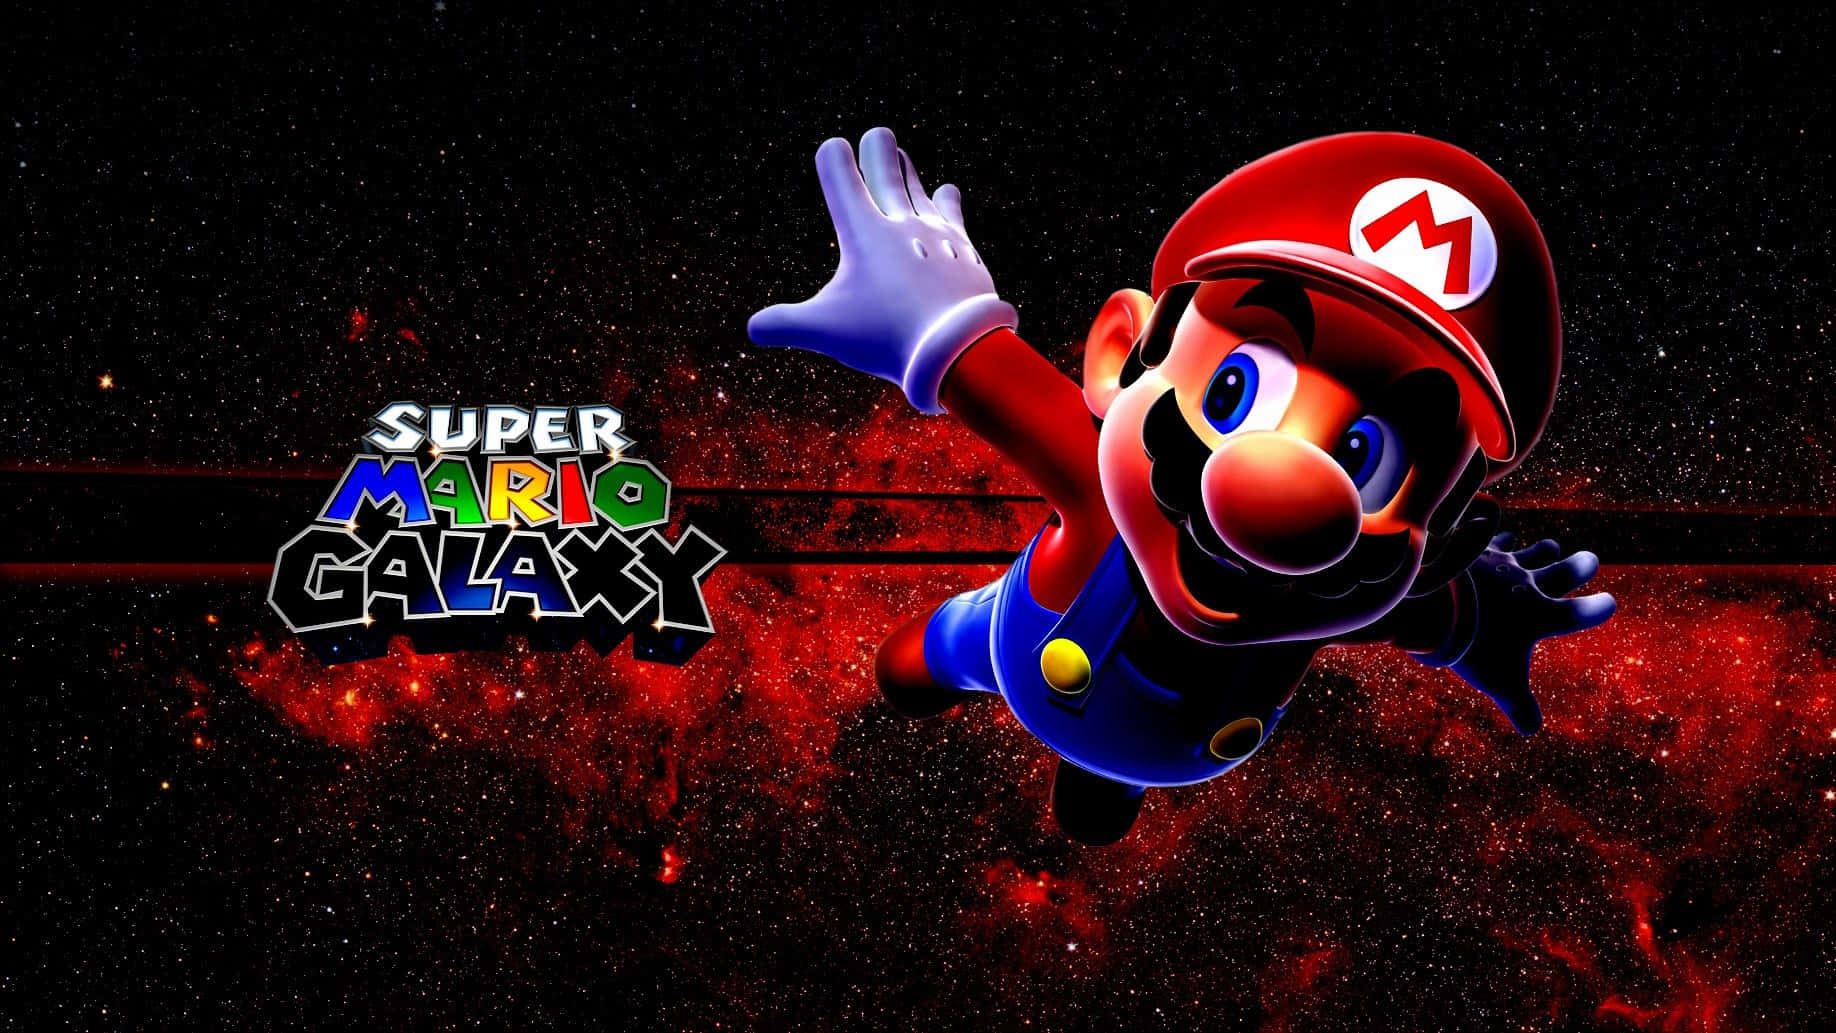 Join Mario on an intergalactic adventure with Super Mario Galaxy. Wallpaper